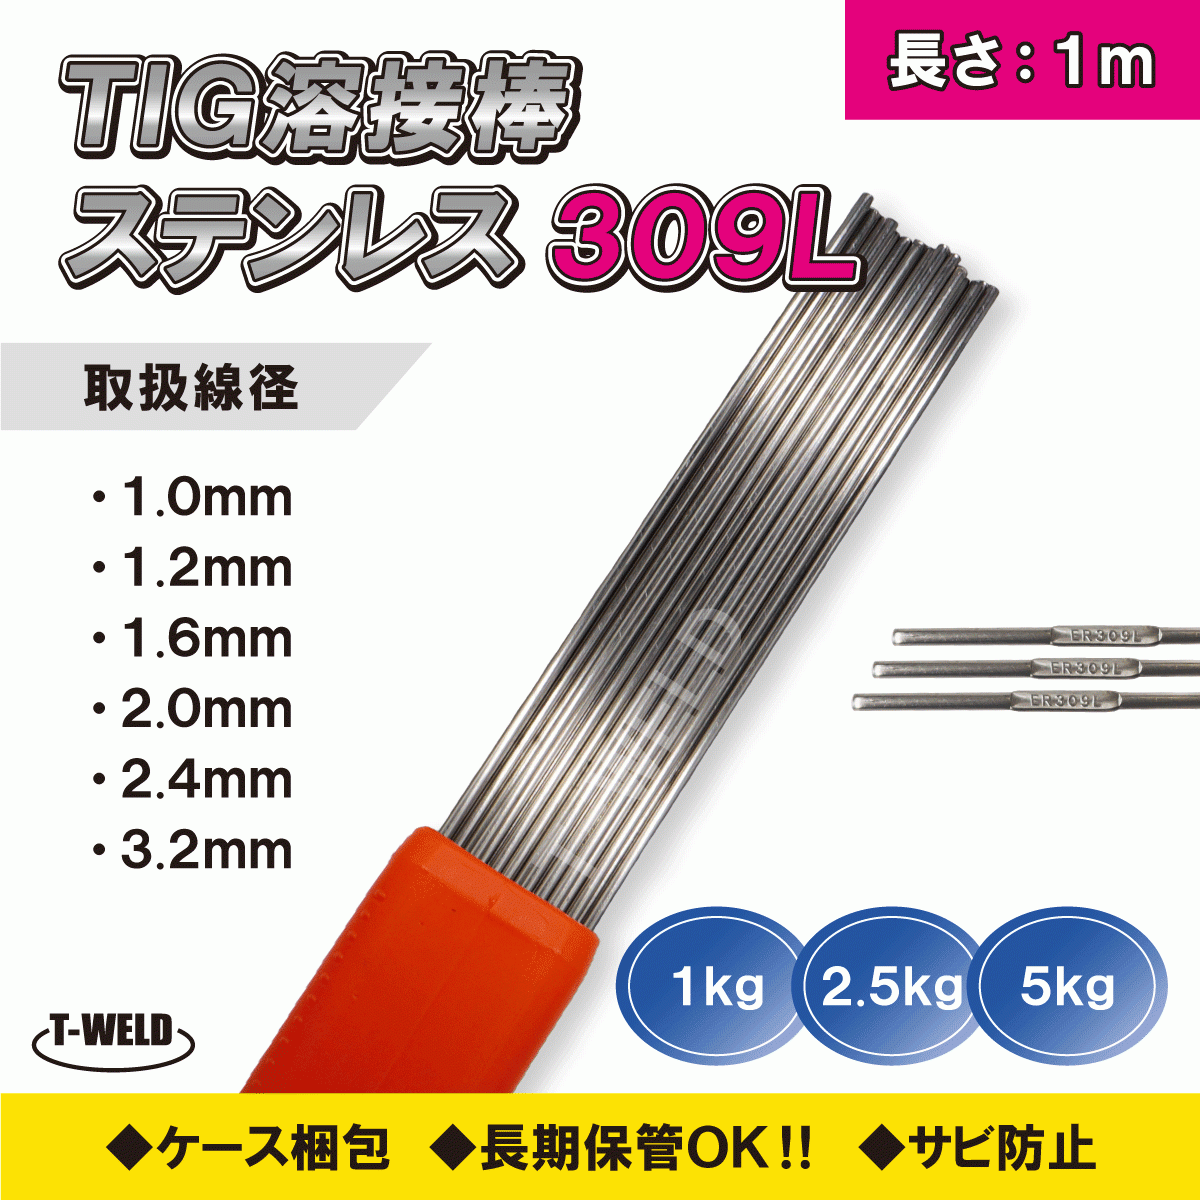 TIG stainless steel welding stick TIG 309L 3.2mm×1m 5kg